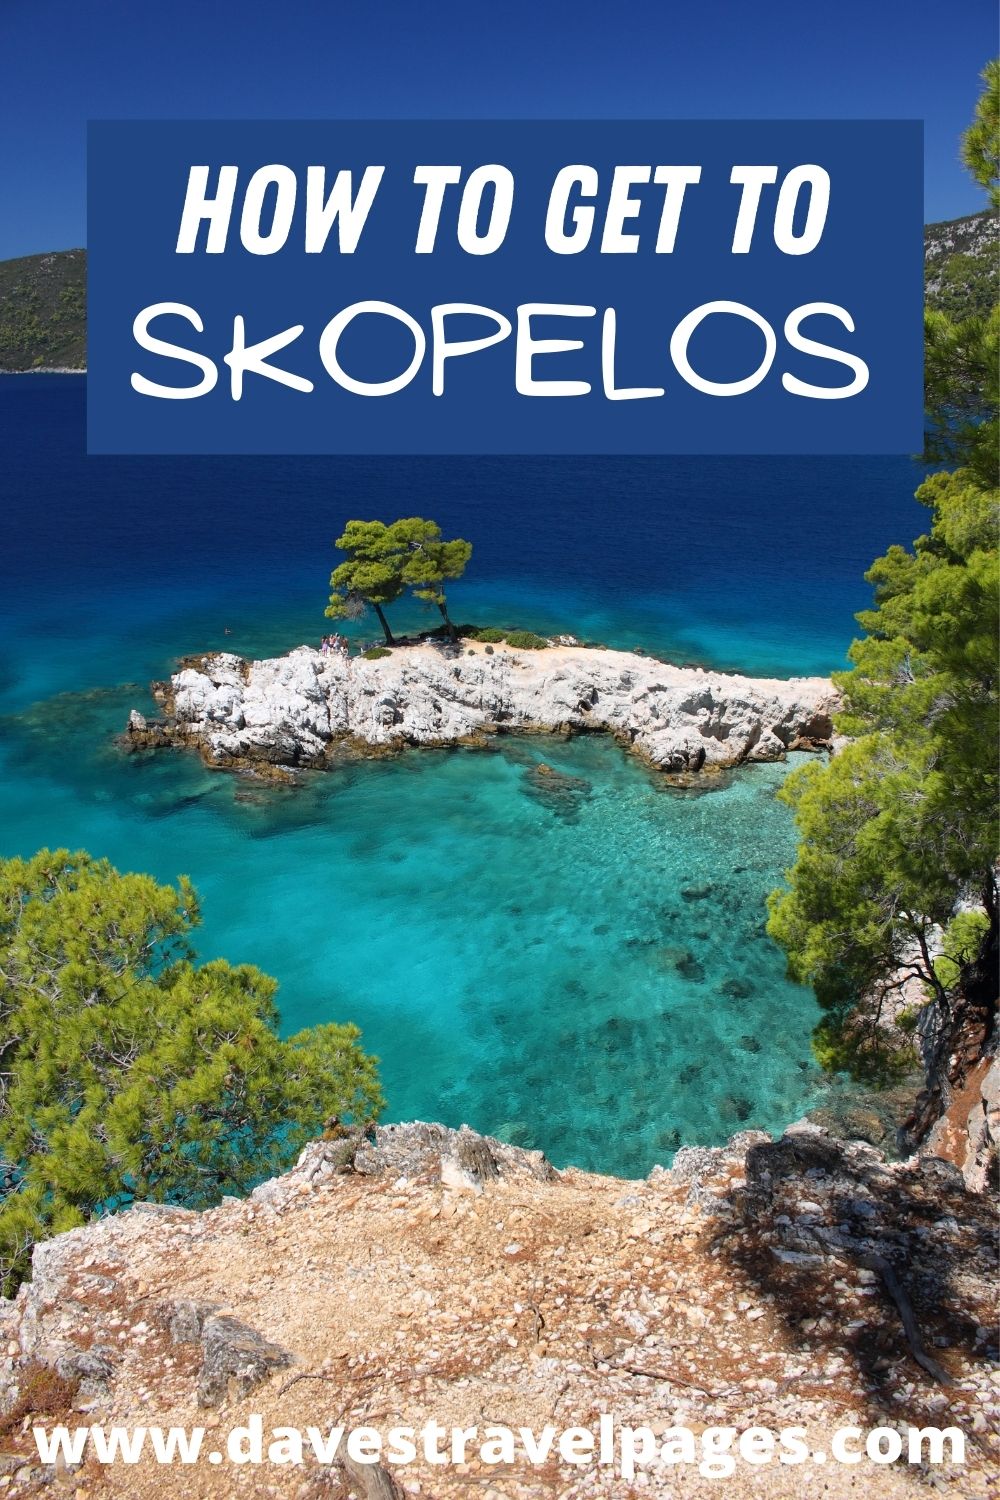 How to get to Skopelos - Mamma Mia Island!